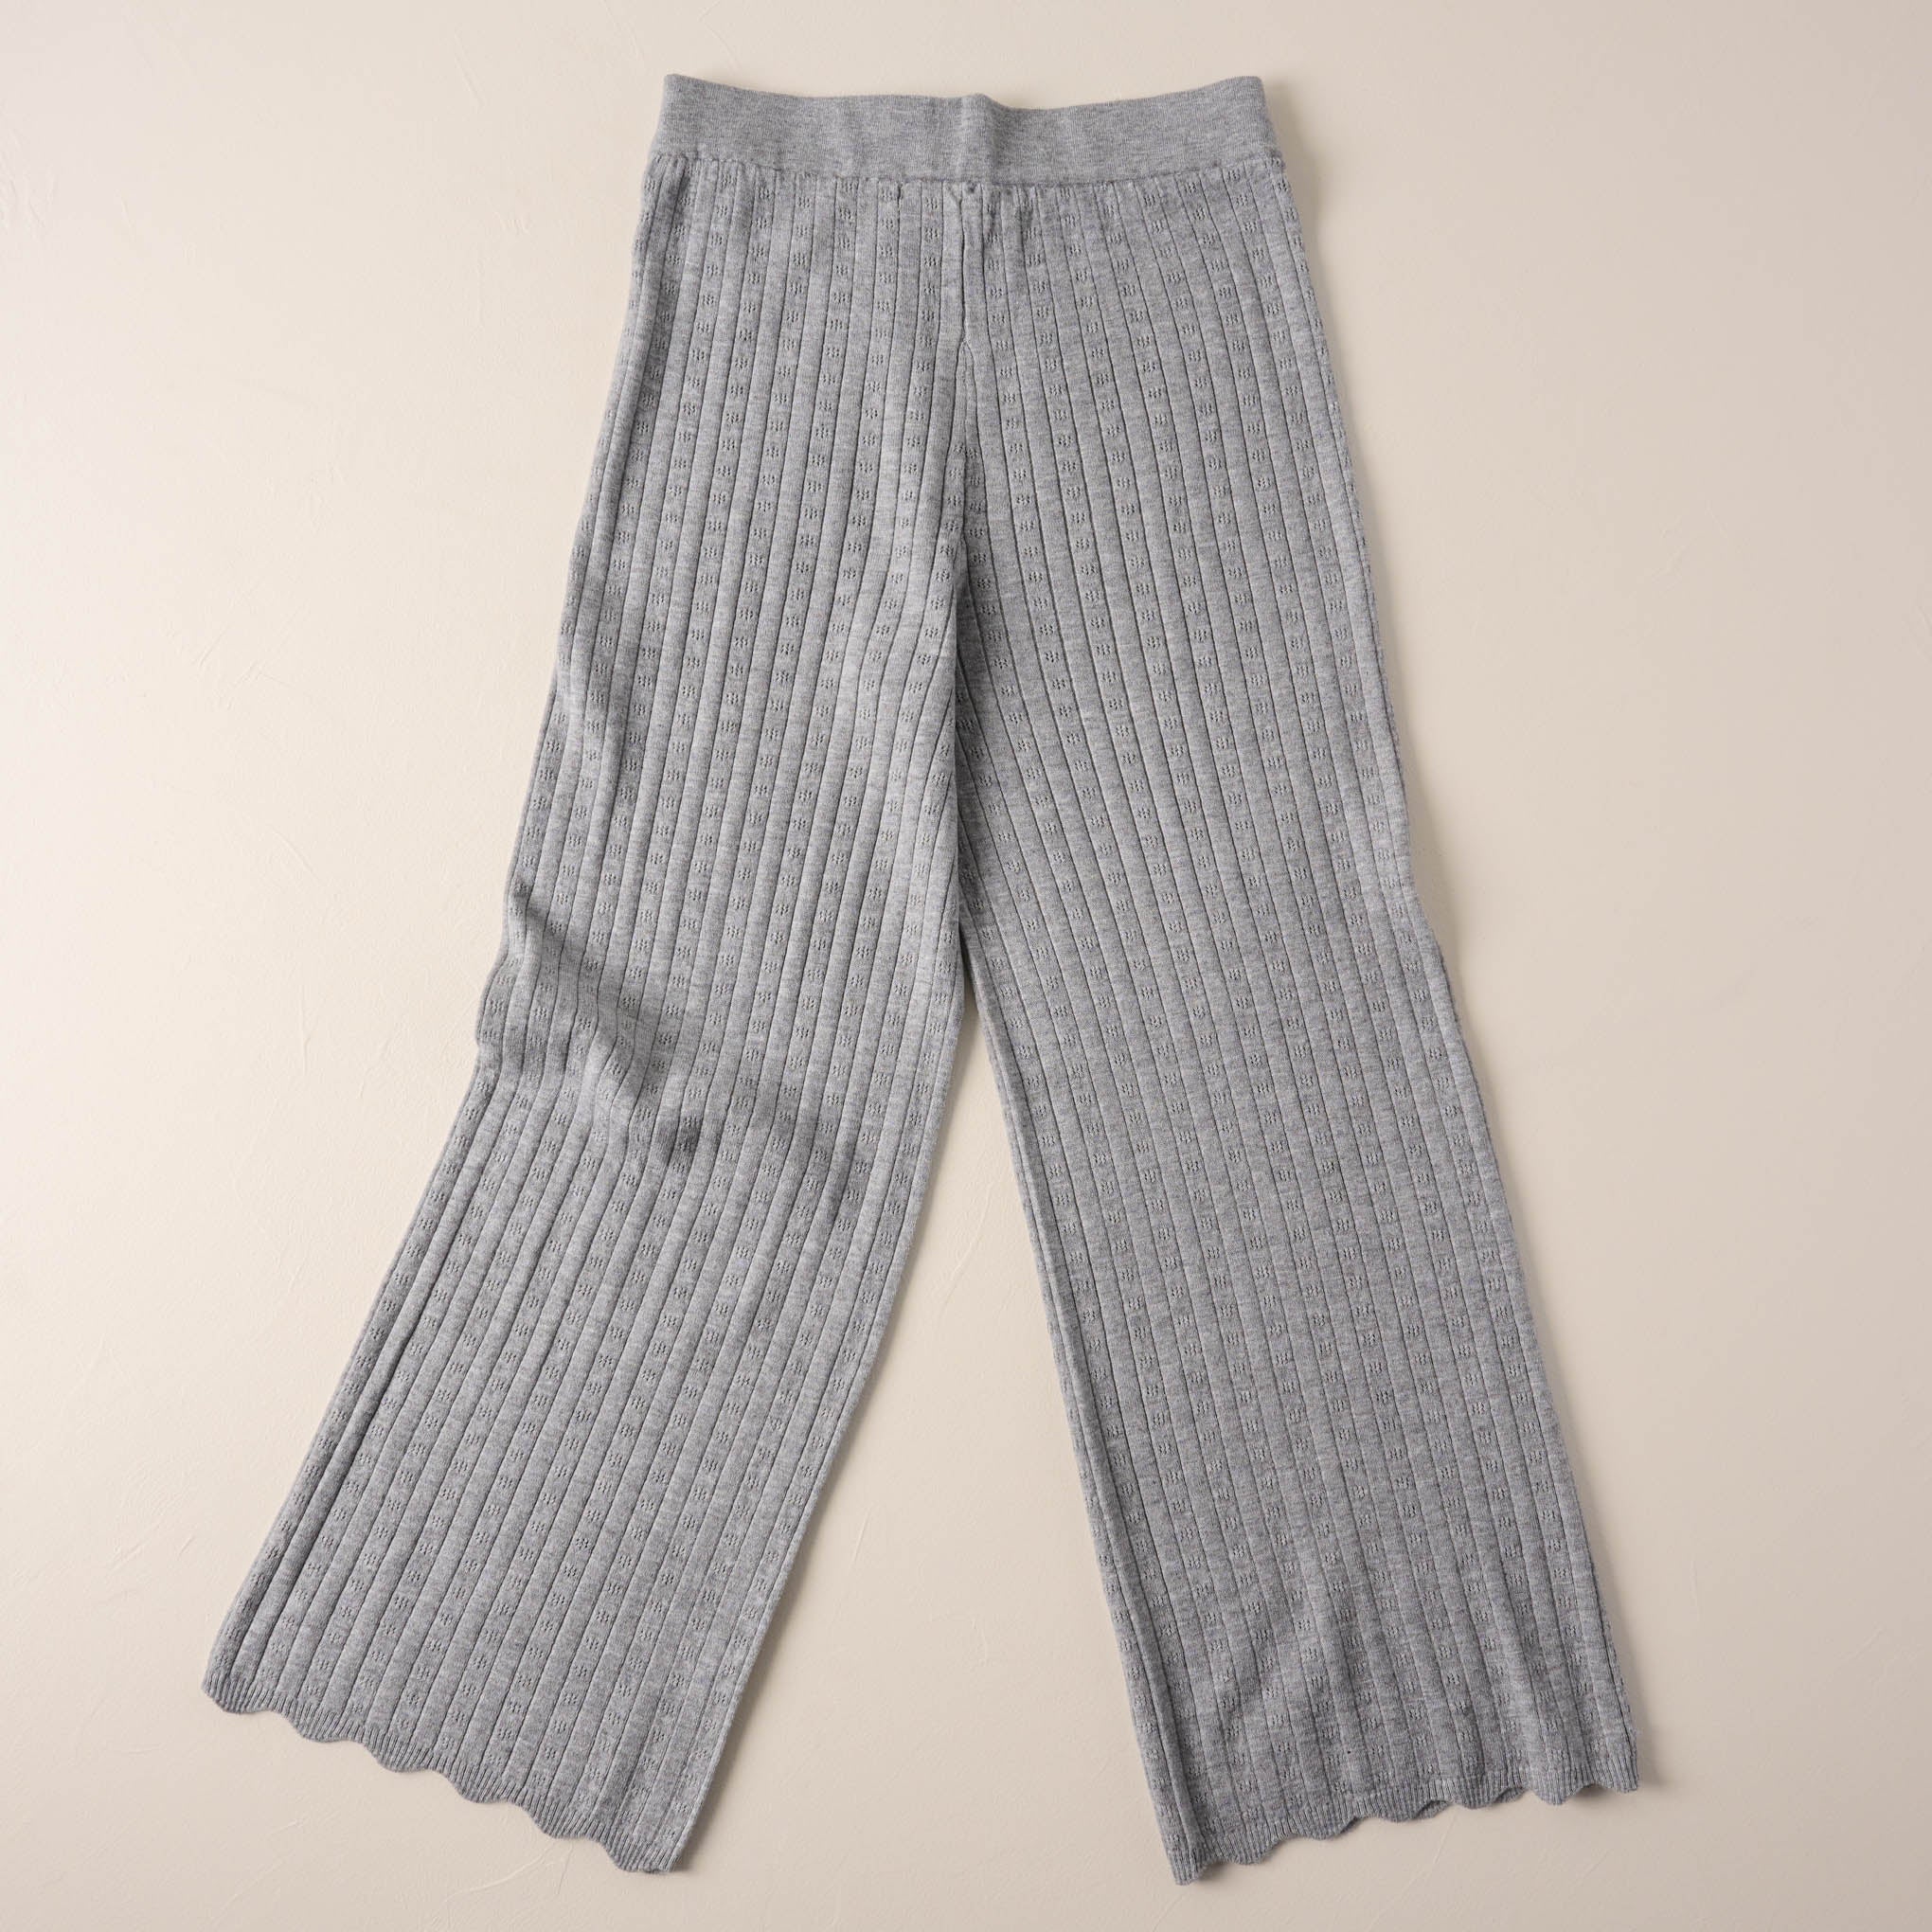 Pointelle French Grey Pant - Medium